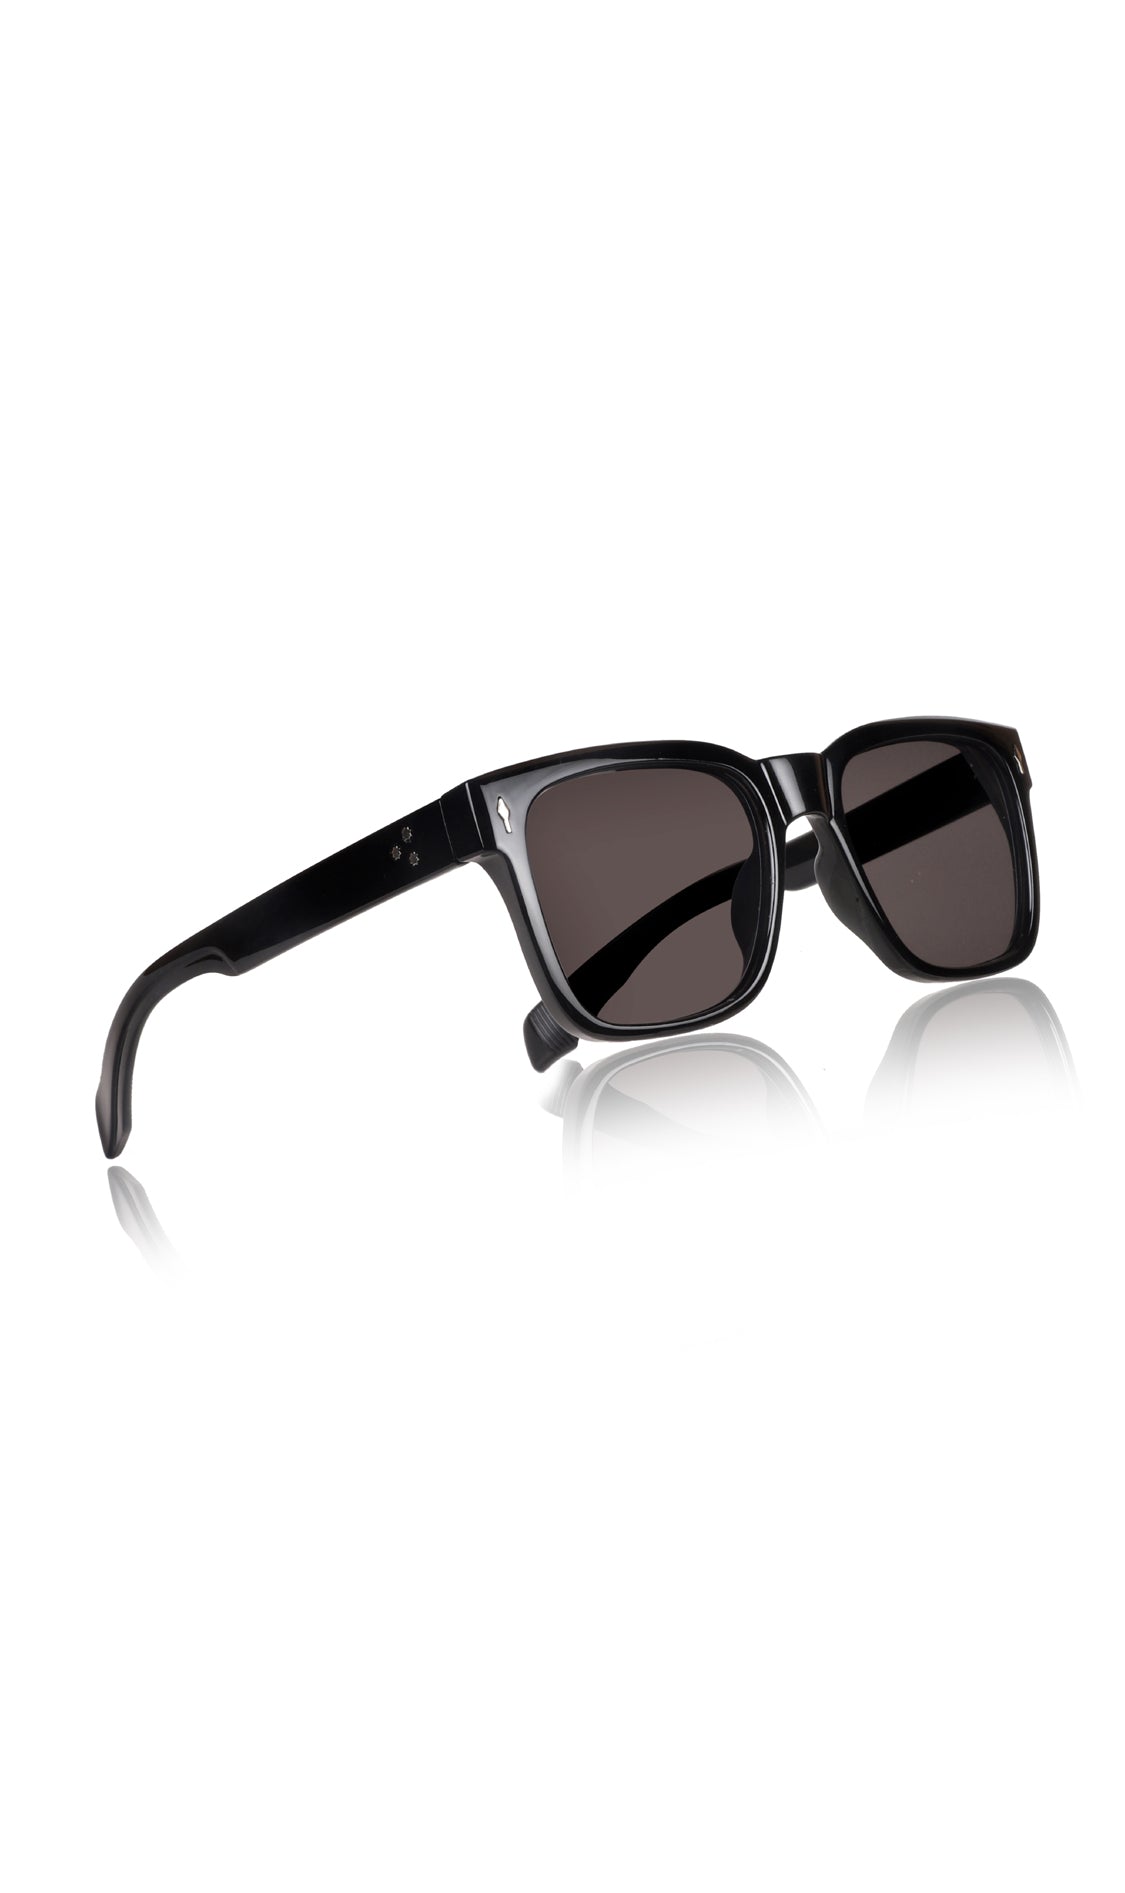 Jodykoes® Premium Series Square UV Protection Sunglasses | Fashionable Sun Shades Comfortable Eyewear Eyeglasses for Men and Women (Black) - Jodykoes ®